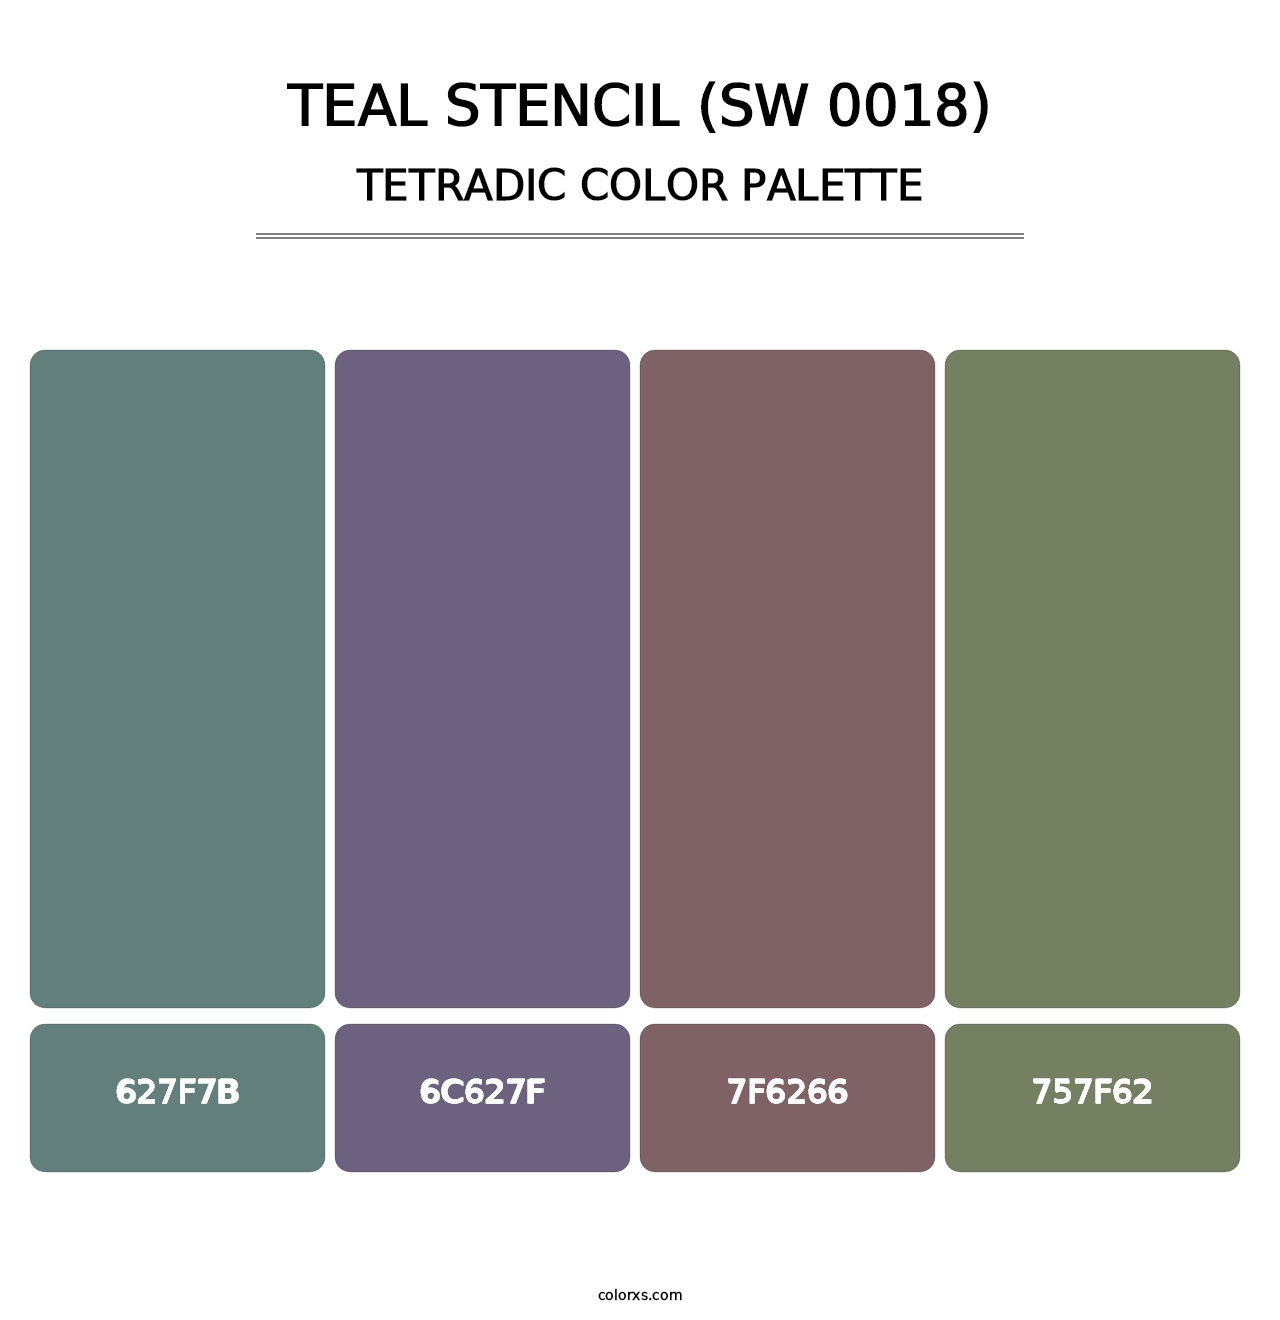 Teal Stencil (SW 0018) - Tetradic Color Palette